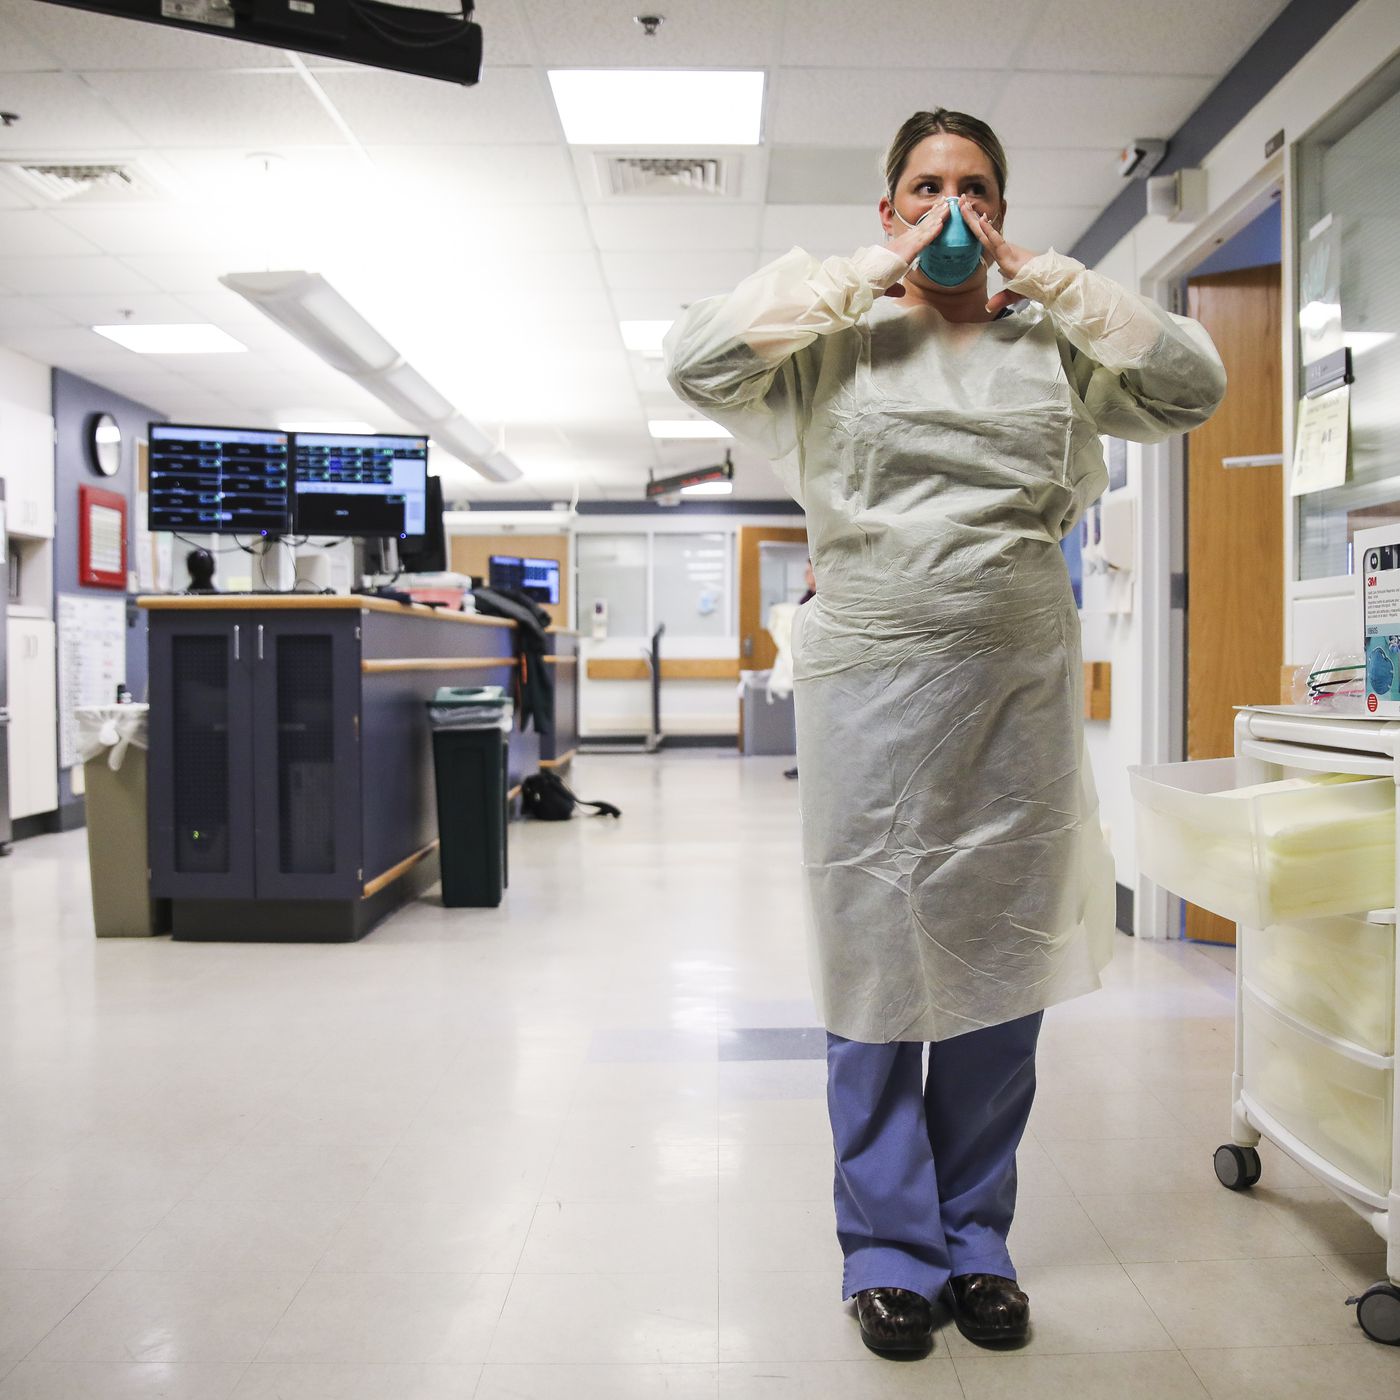 Inside one hospital, see how they provide care amid chaos : Shots - Health  News : NPR